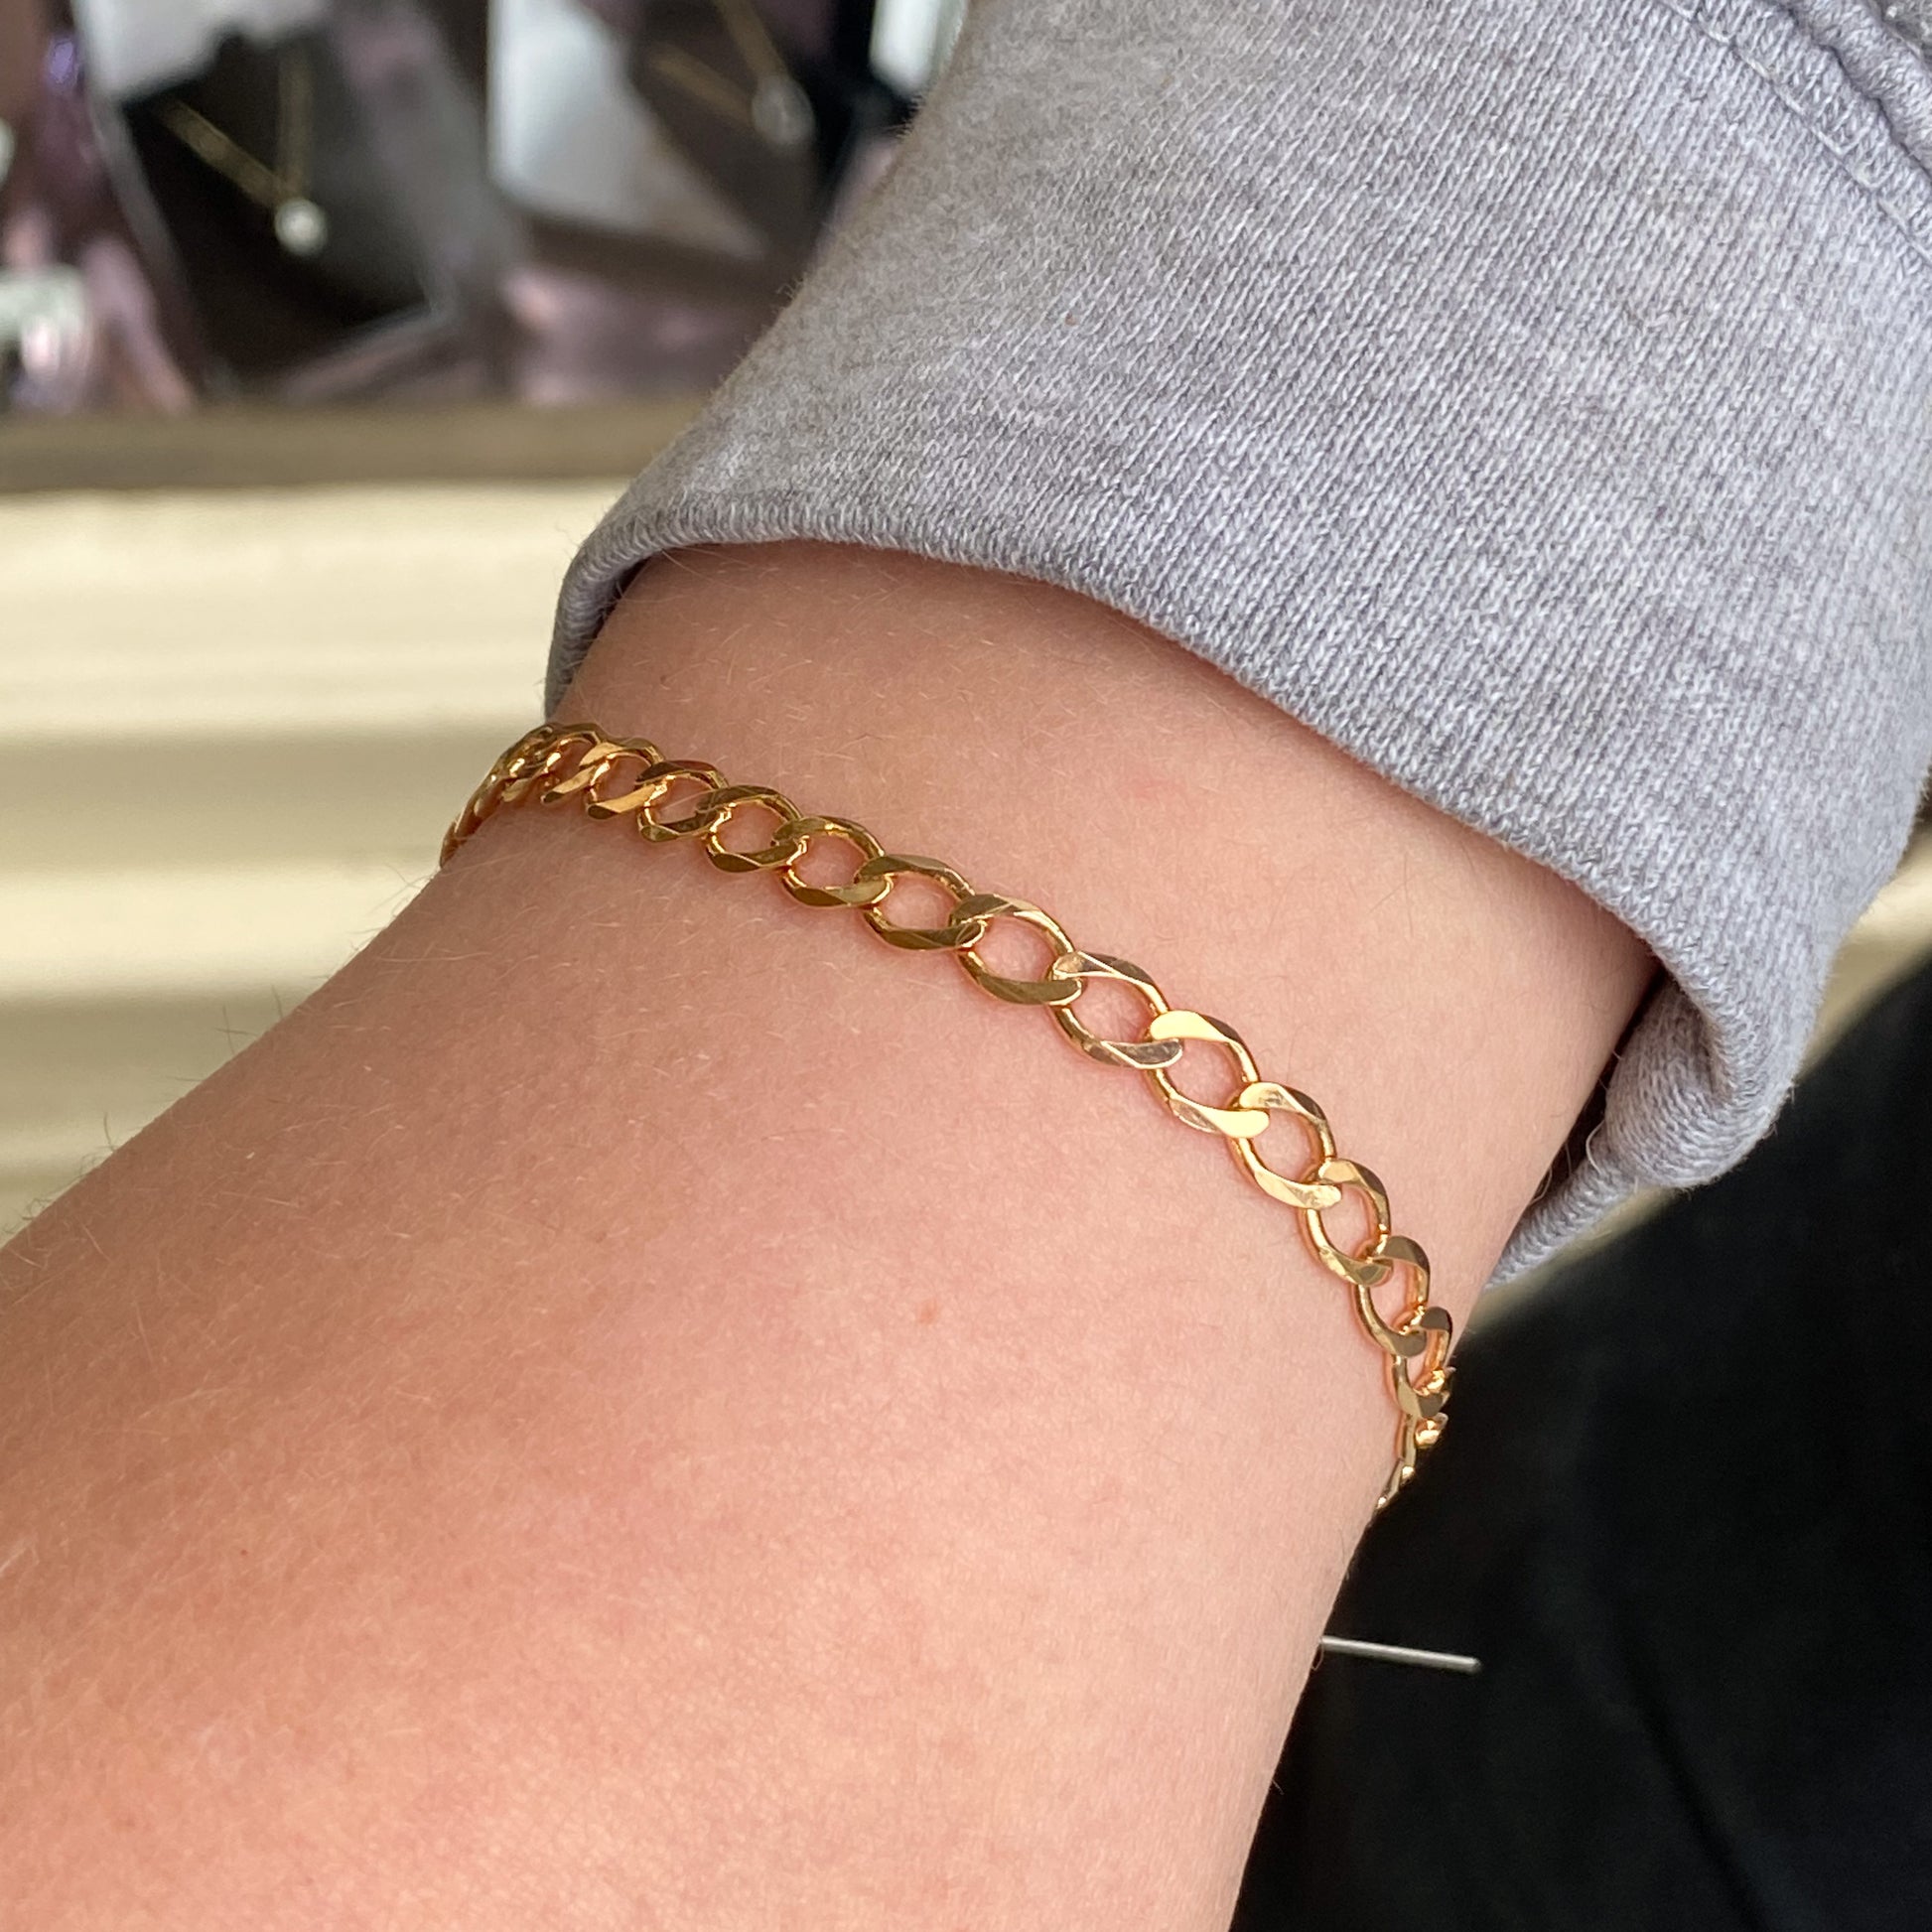 9ct Gold Curb Bracelet - Heavy Look - 8” - John Ross Jewellers